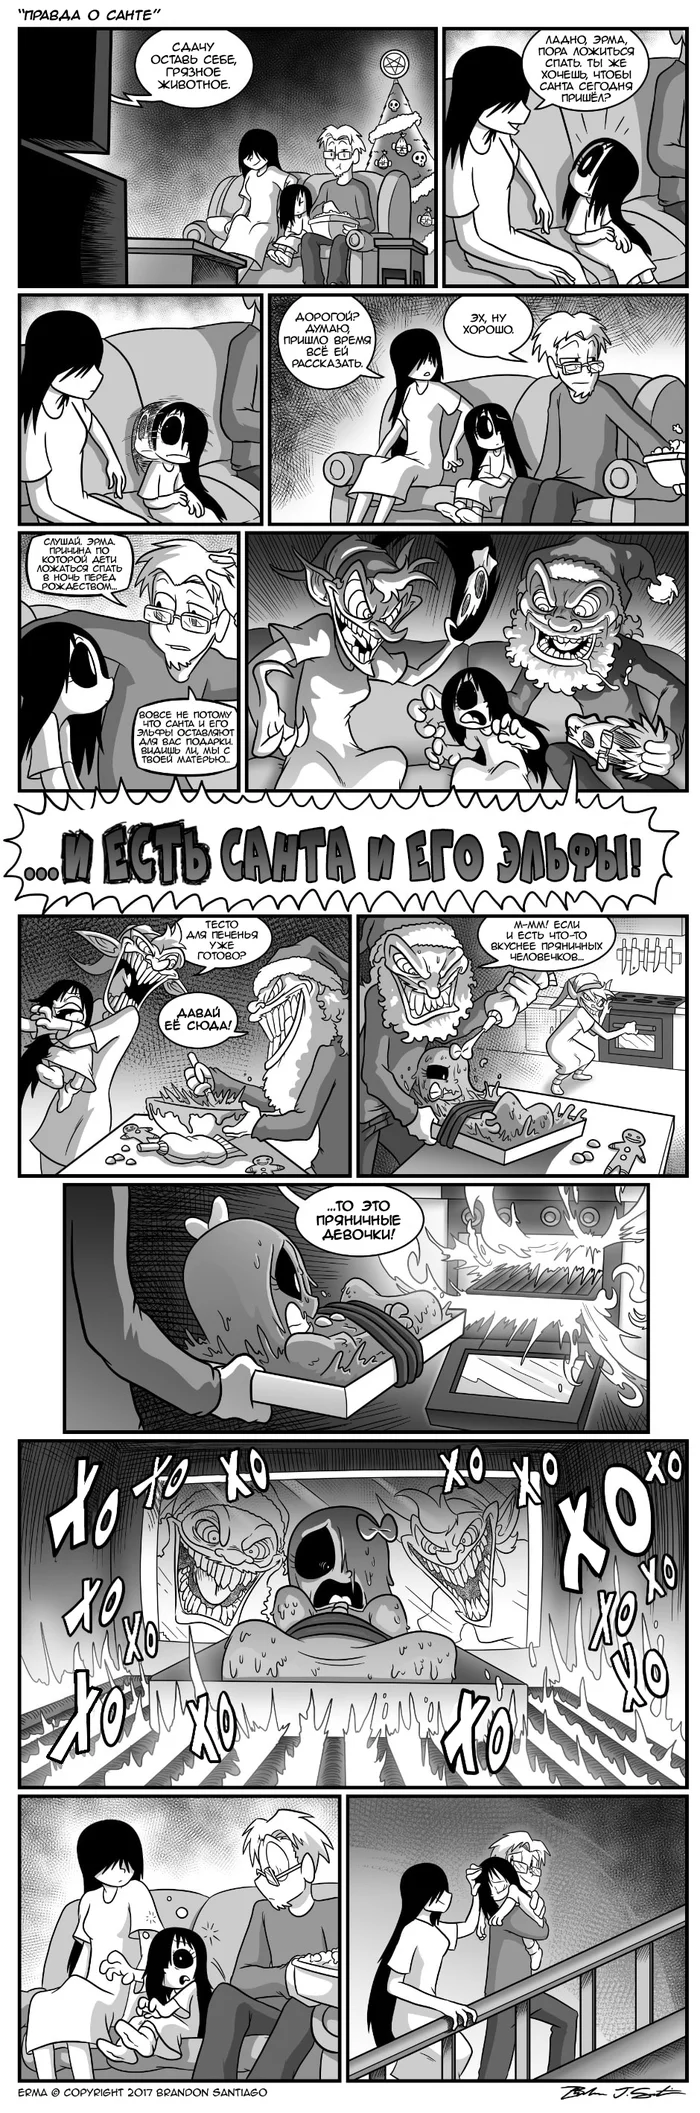 The truth about Santa - Erma, Comics, Longpost